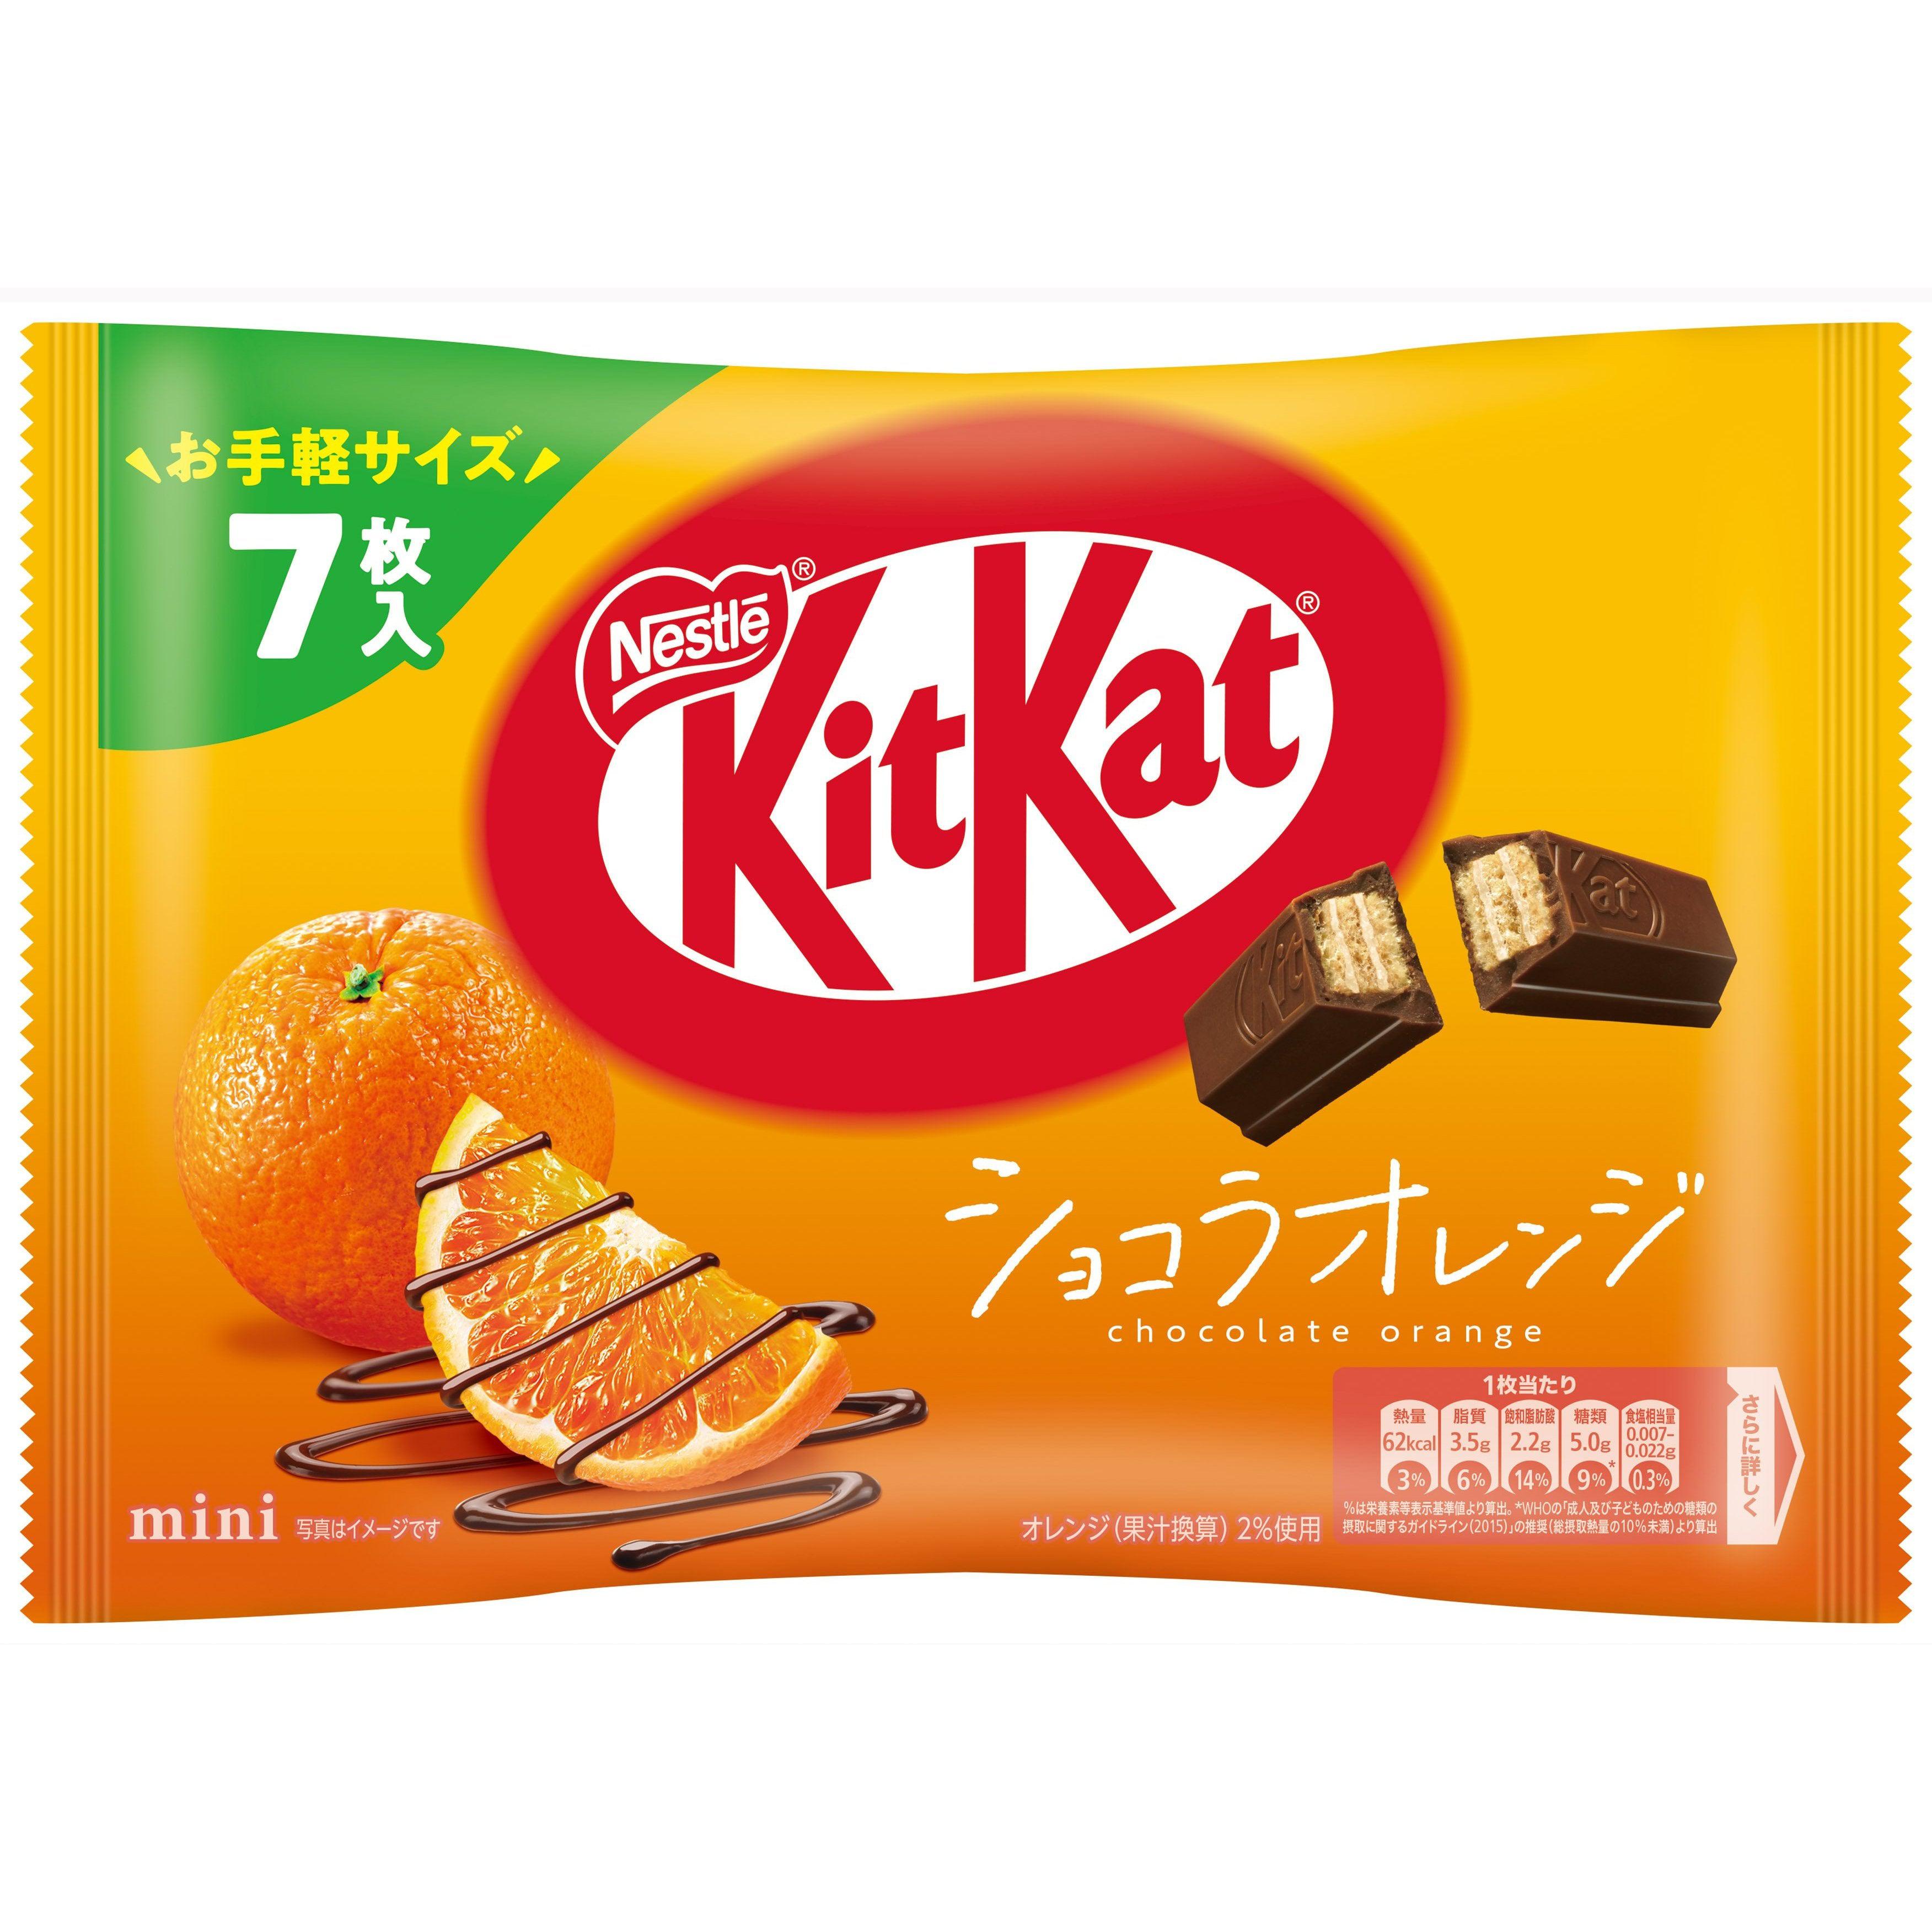 Nestlé Japanese Kit Kat Chocolate Orange Flavor 7 Bars